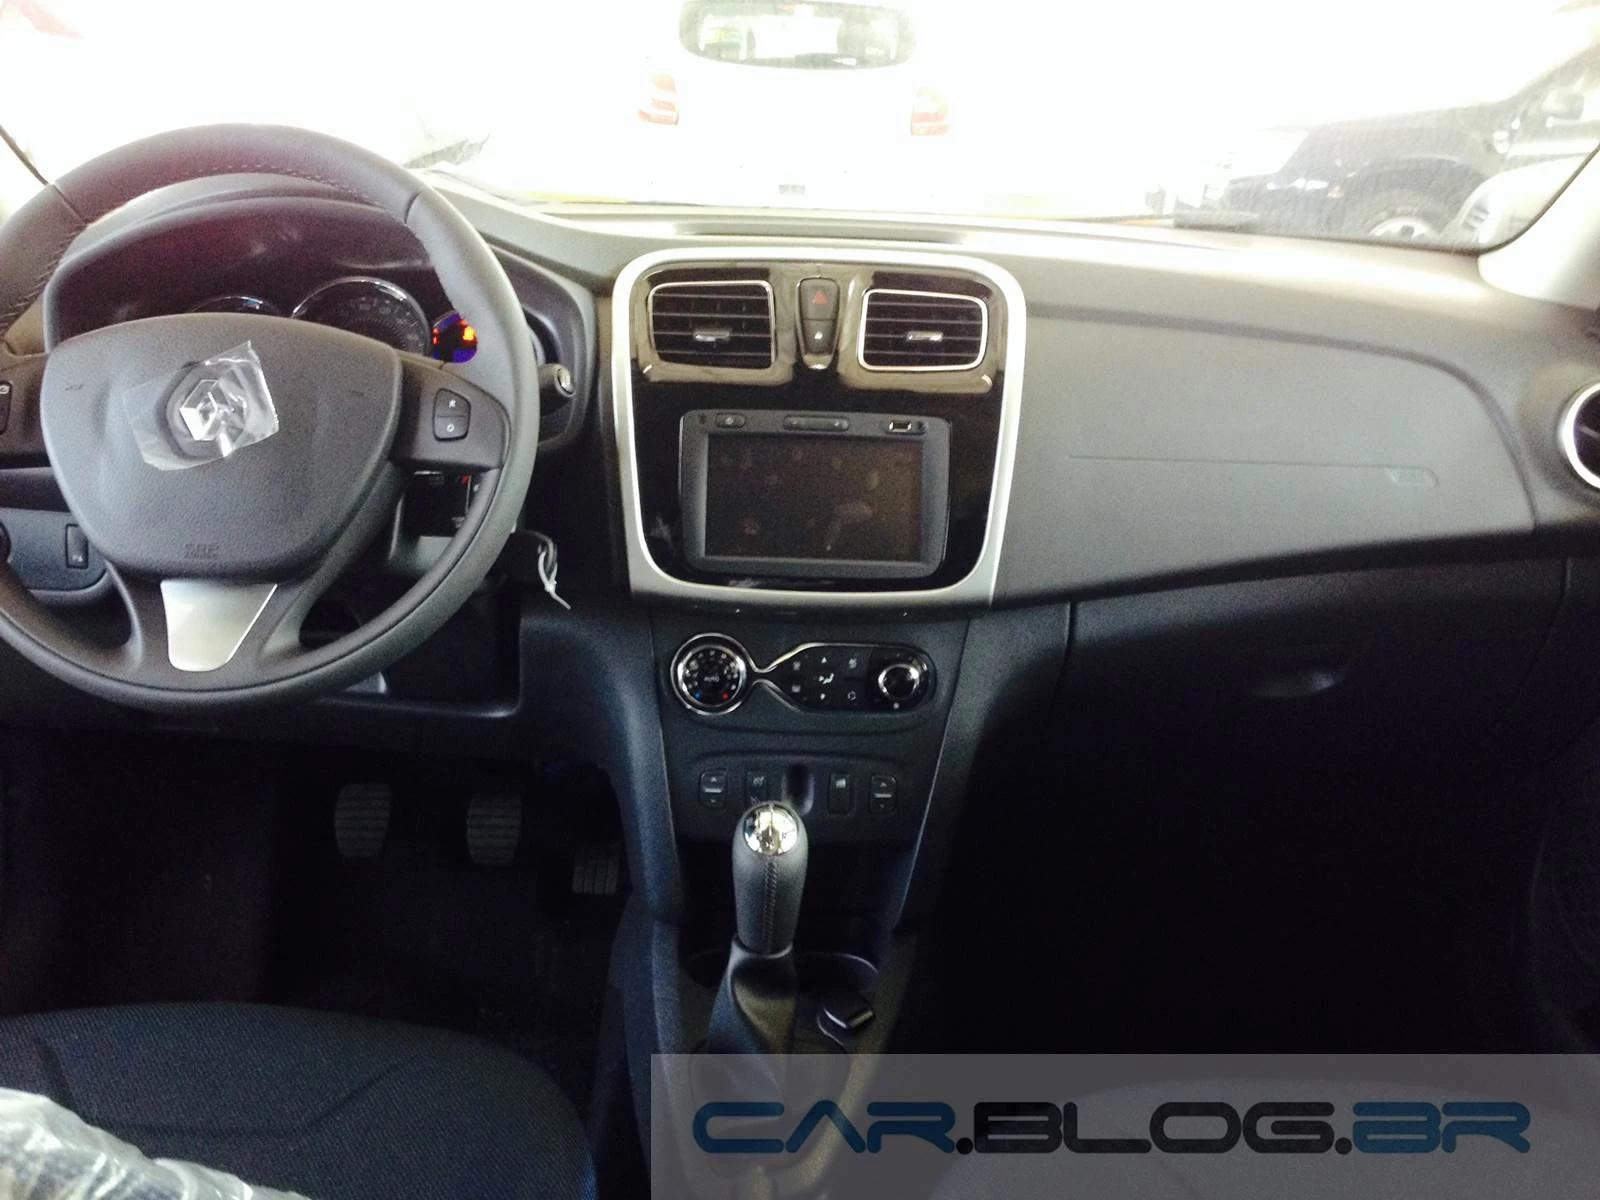 Novo Renault Sandero 2015 - interior